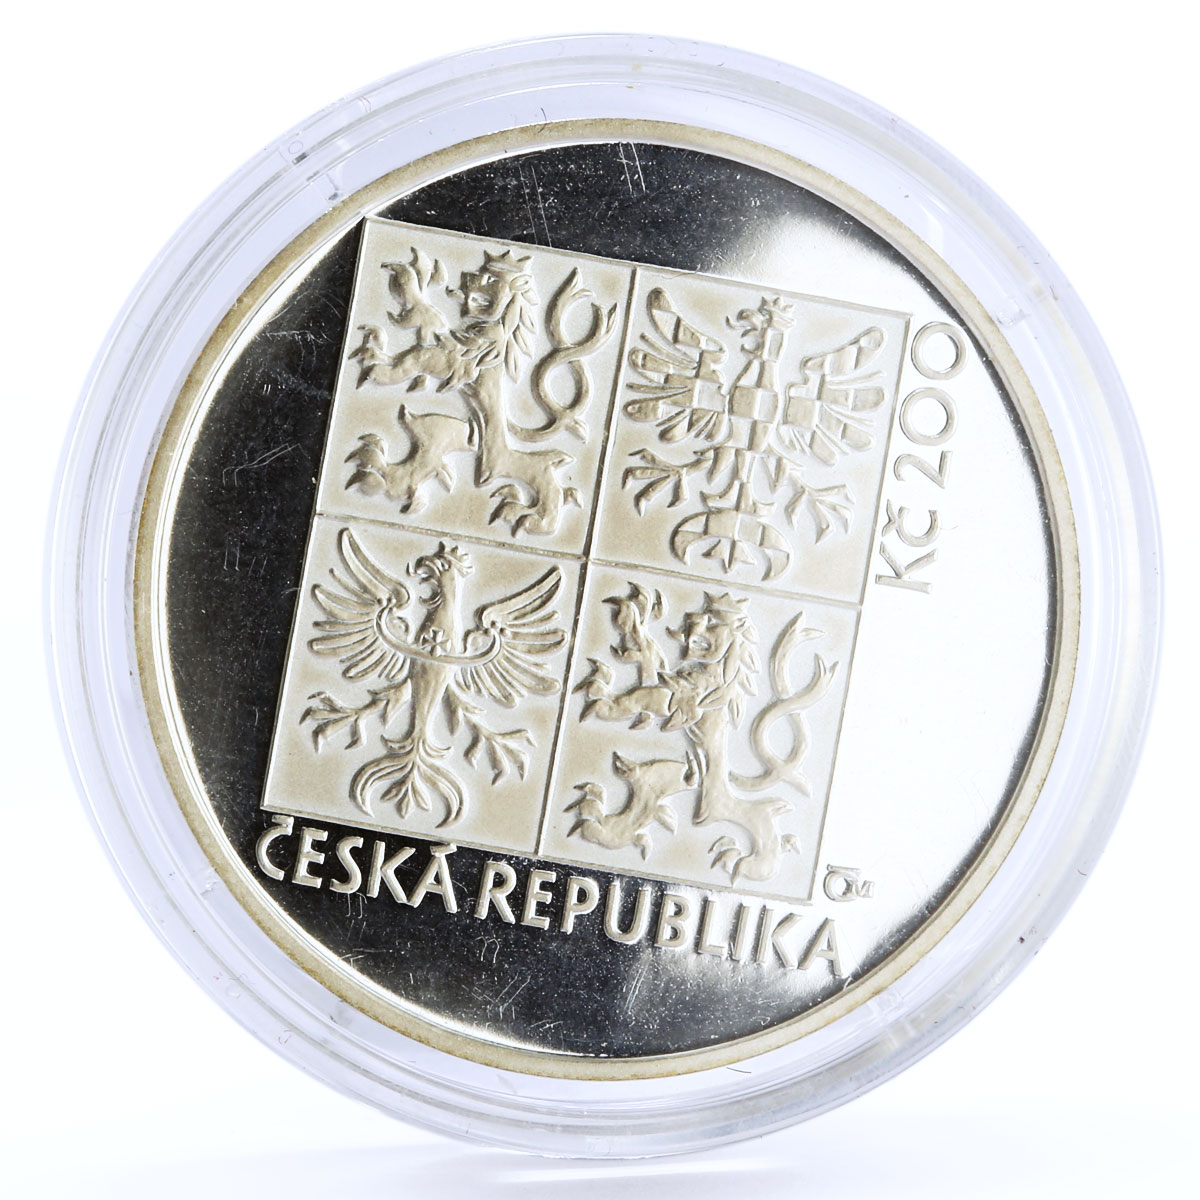 Czech Republic 200 korun Old Cars Retro Auto President proof silver coin 1997